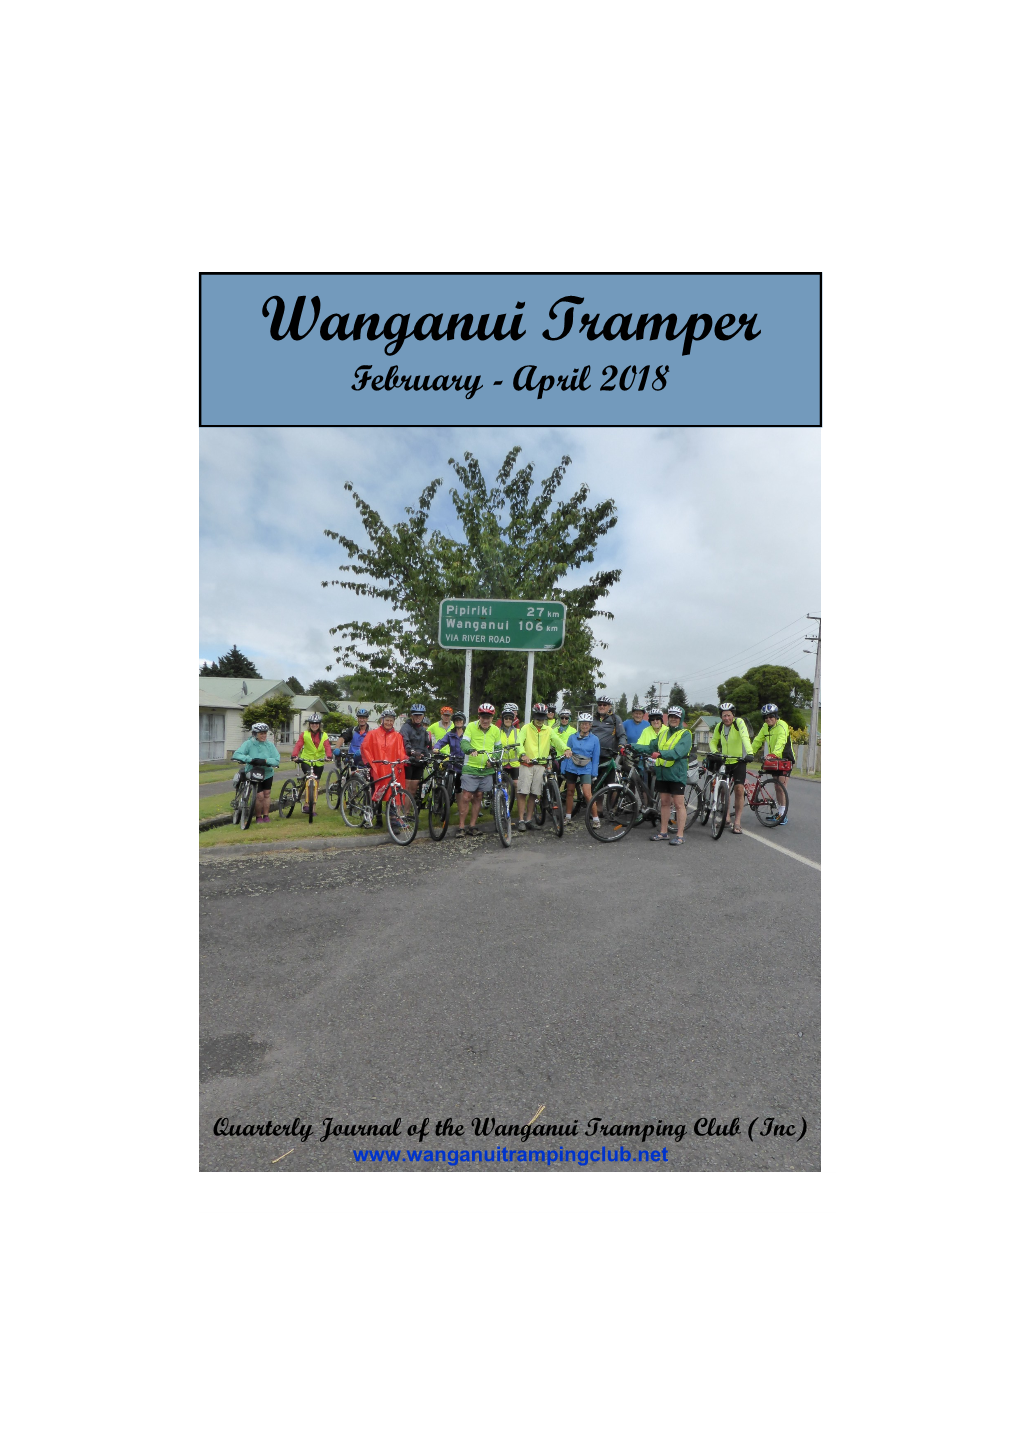 Wanganui Tramper February - April 2018